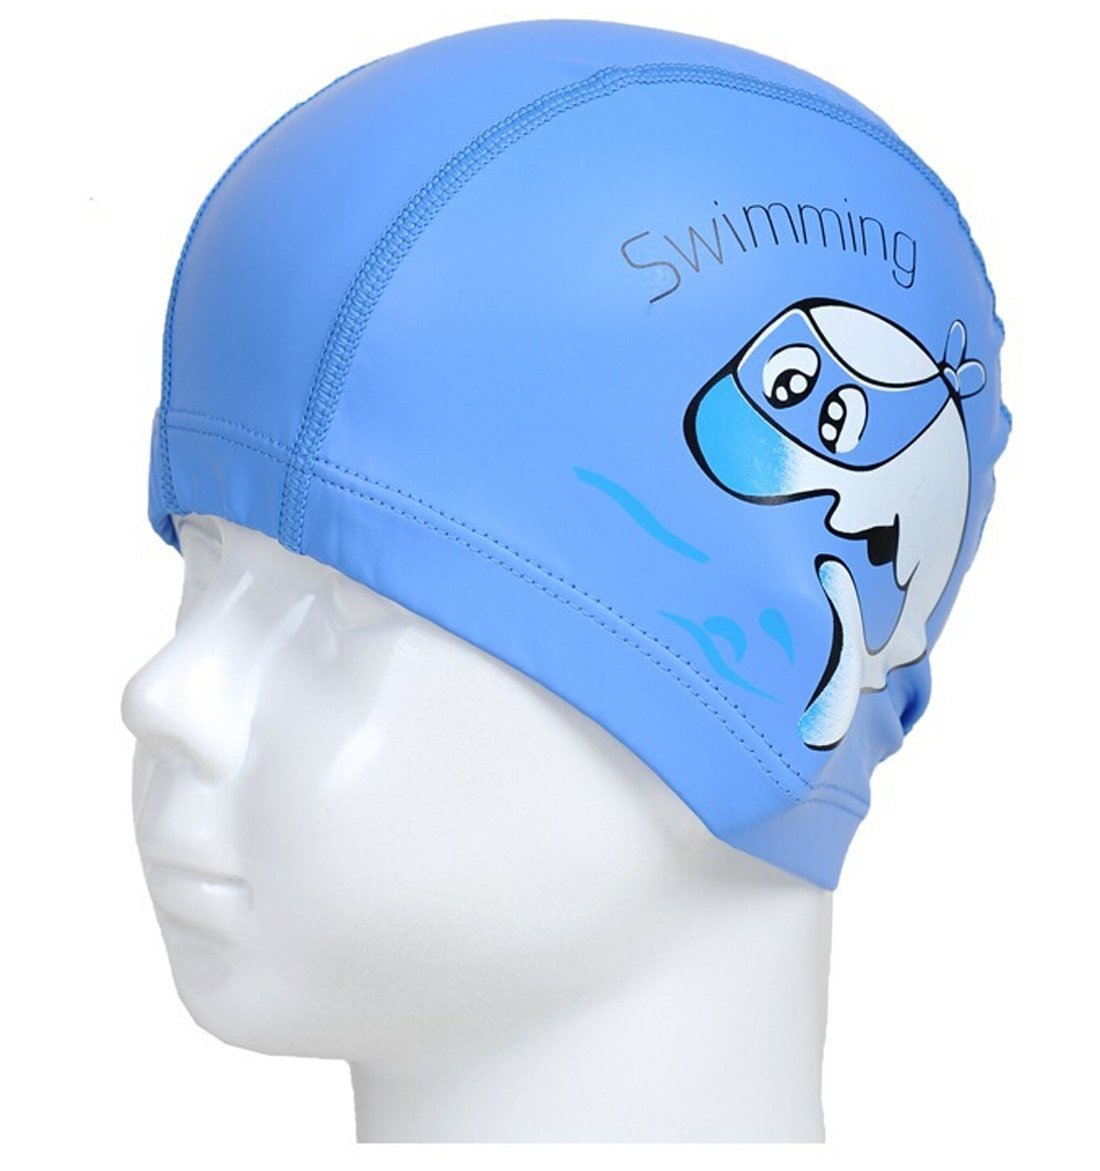 Waterproof Swim Cap for Kids Boys Girls, Cute Cartoon PU/Silicone No-slip Swimming Bathing Cap for Children Long Short Hair